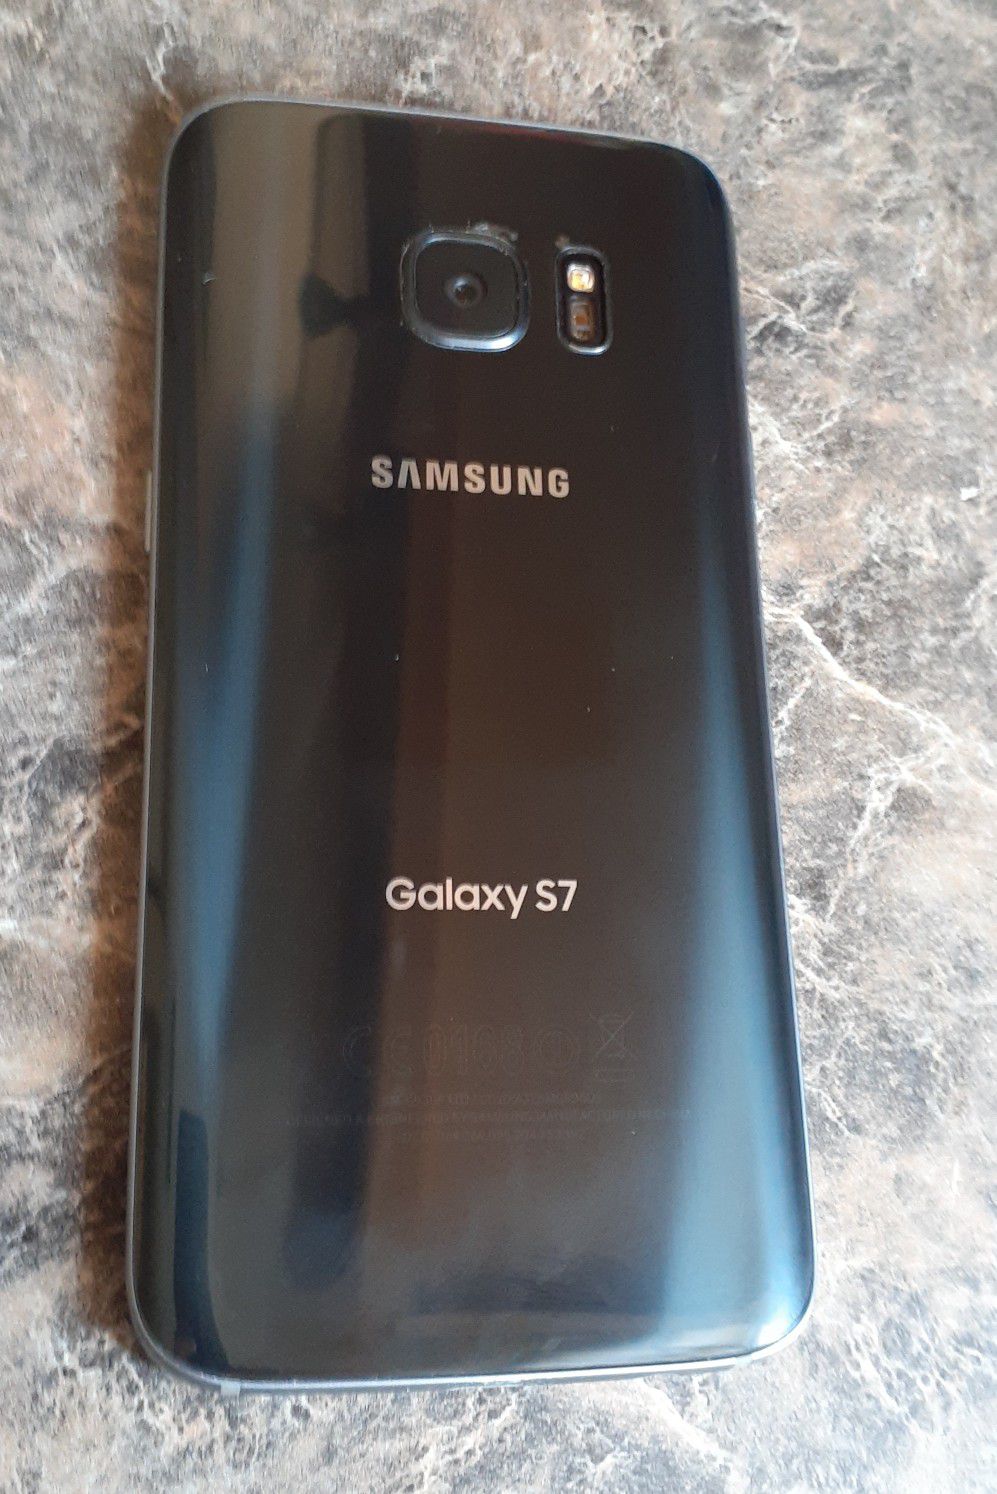 Samsung Galaxy S7 32gb - Factory Unlocked